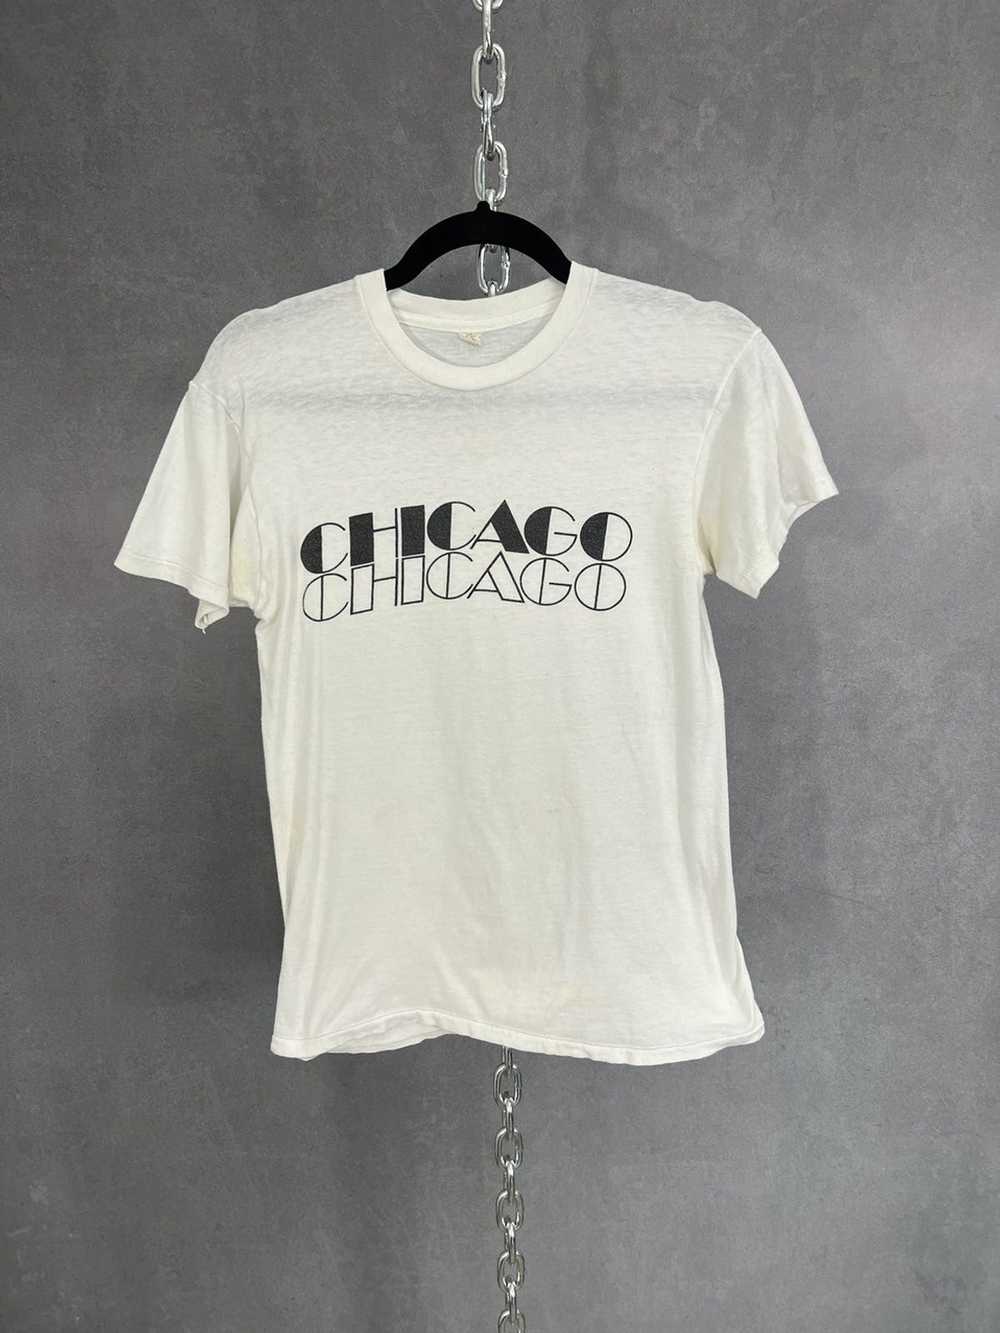 Vintage Vintage 80s Chicago single stitch shirt s… - image 1